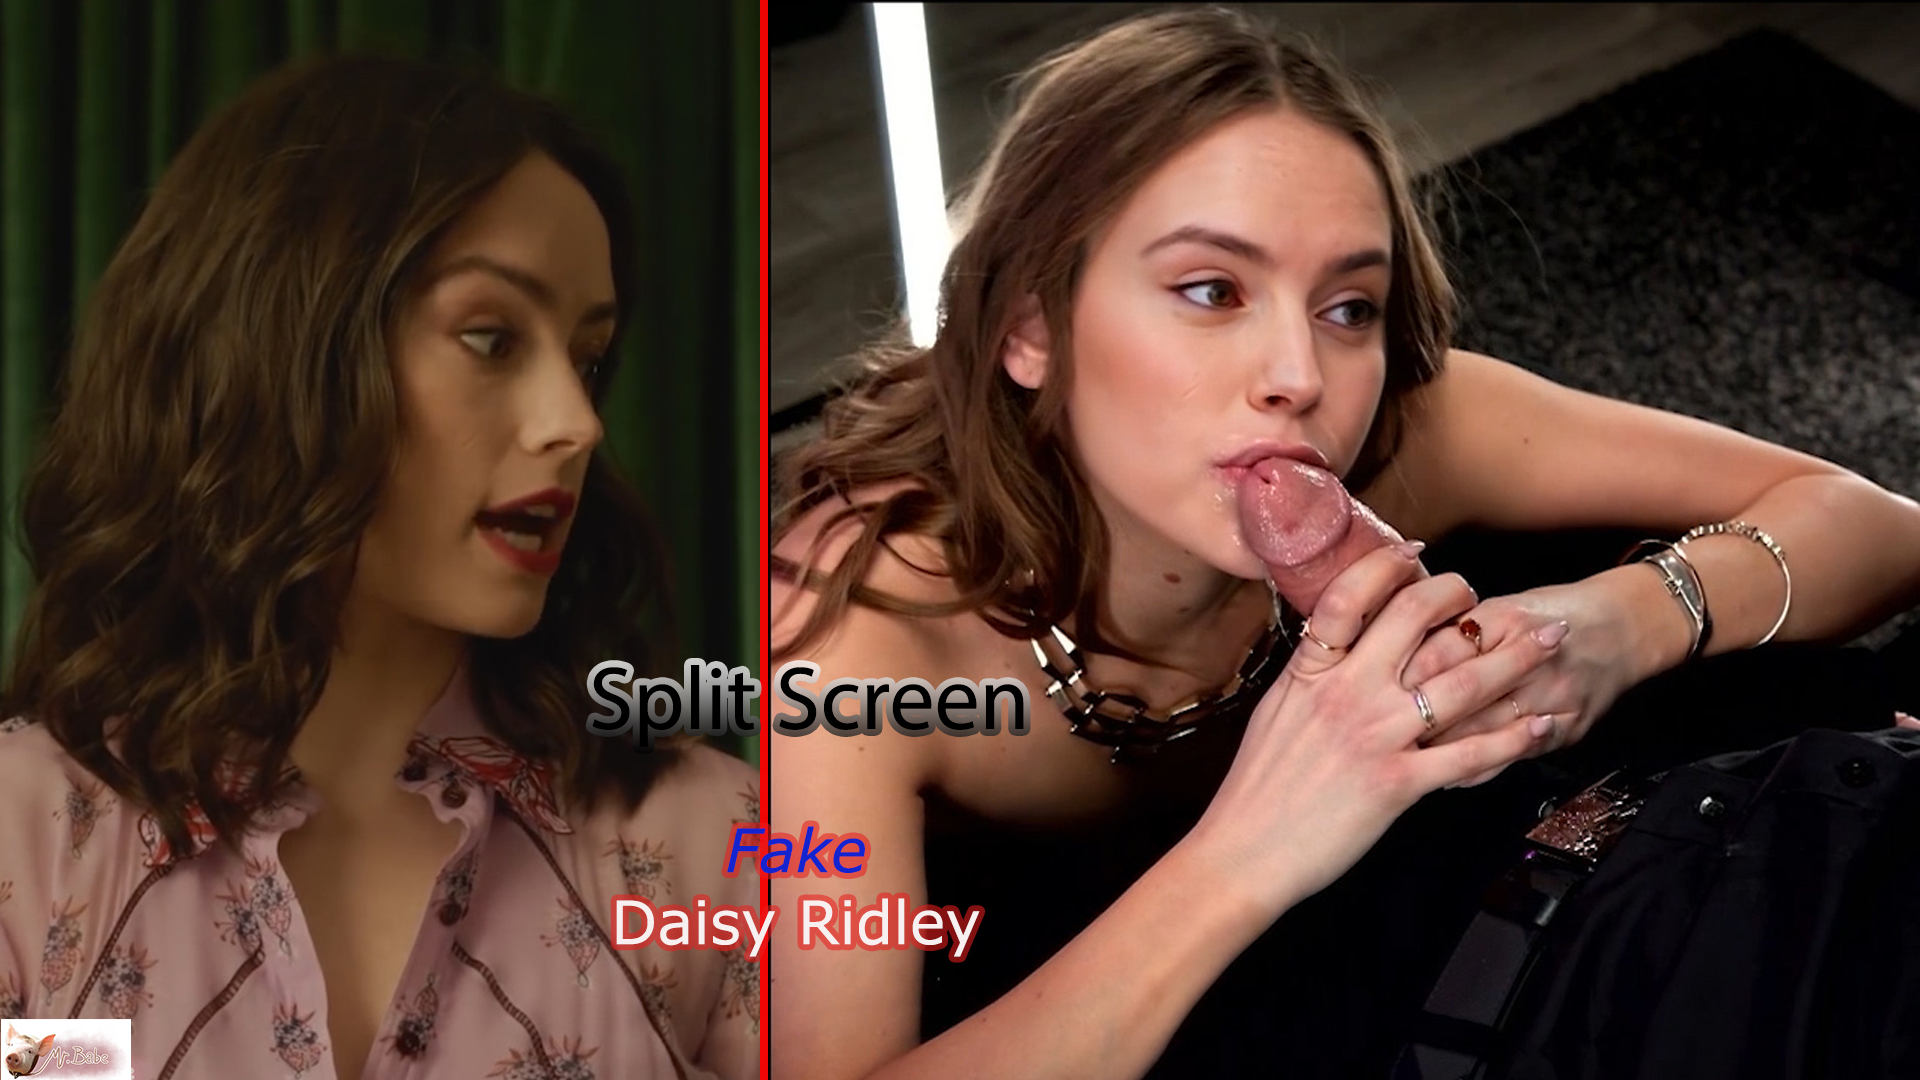 Fake Daisy Ridley -(trailer)- 1 / Split Screen / Free Download